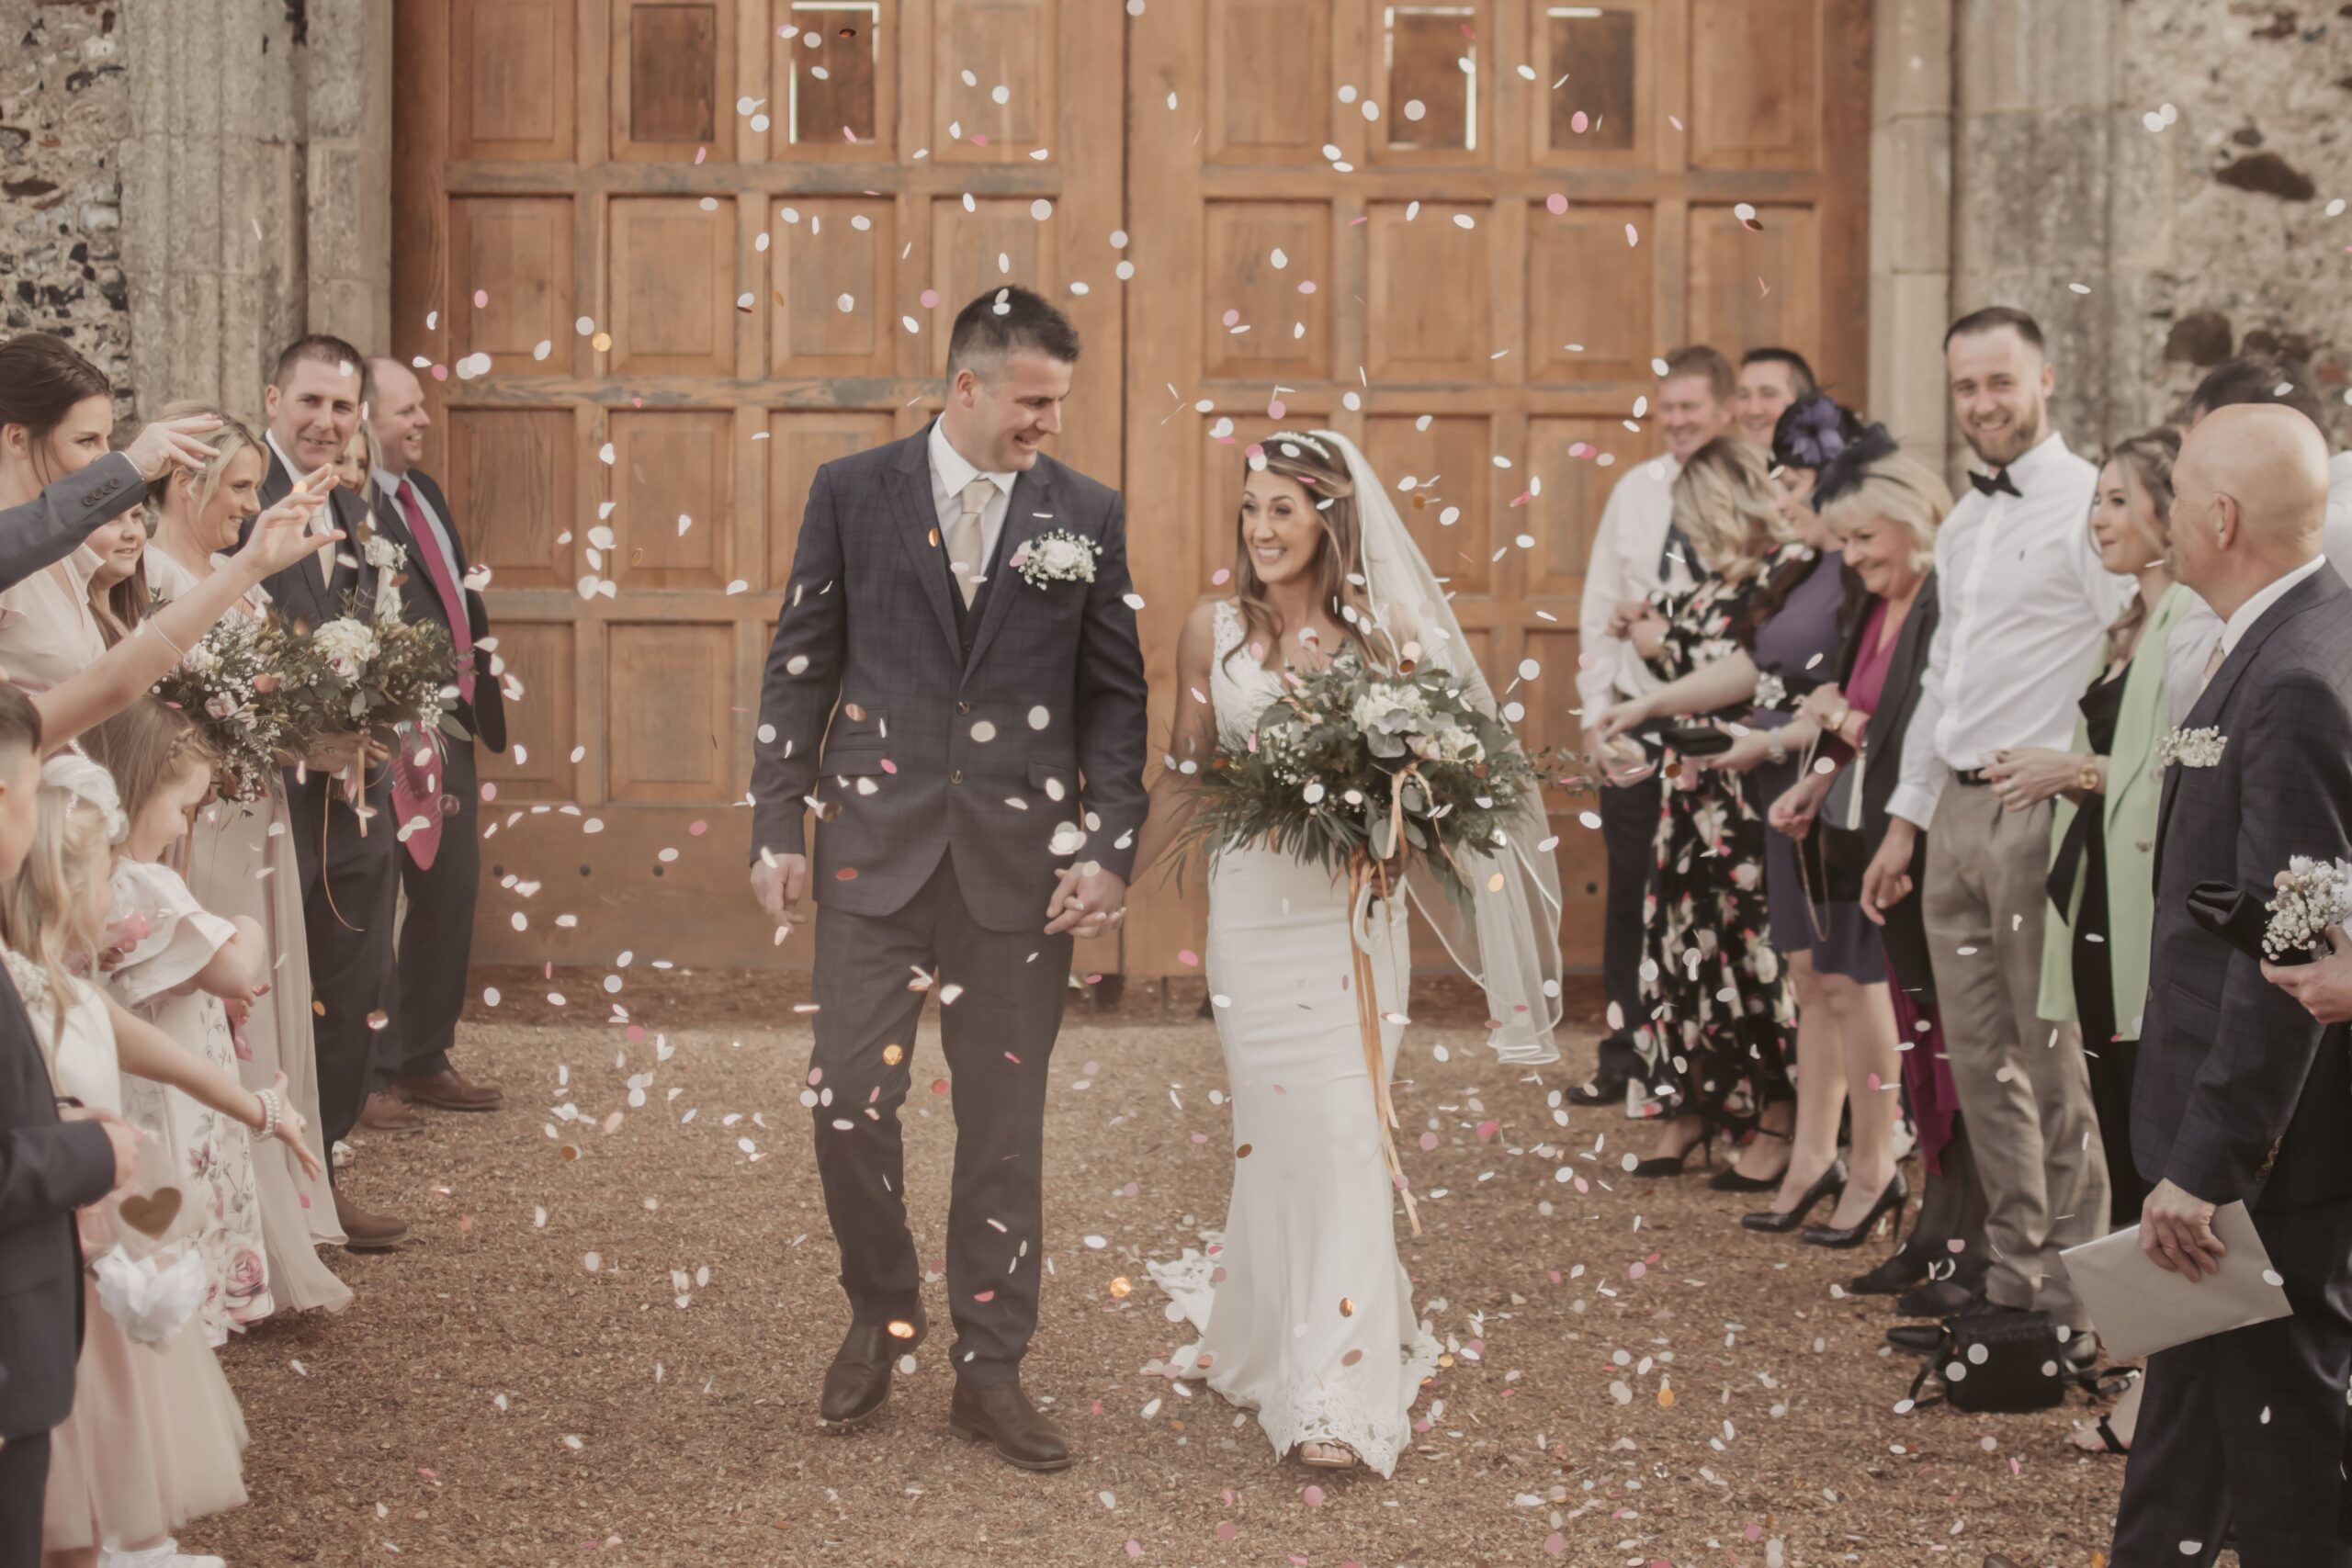 
			Post Marriage Photoshoot | Barn Wedding Reception | Pentney Abbey